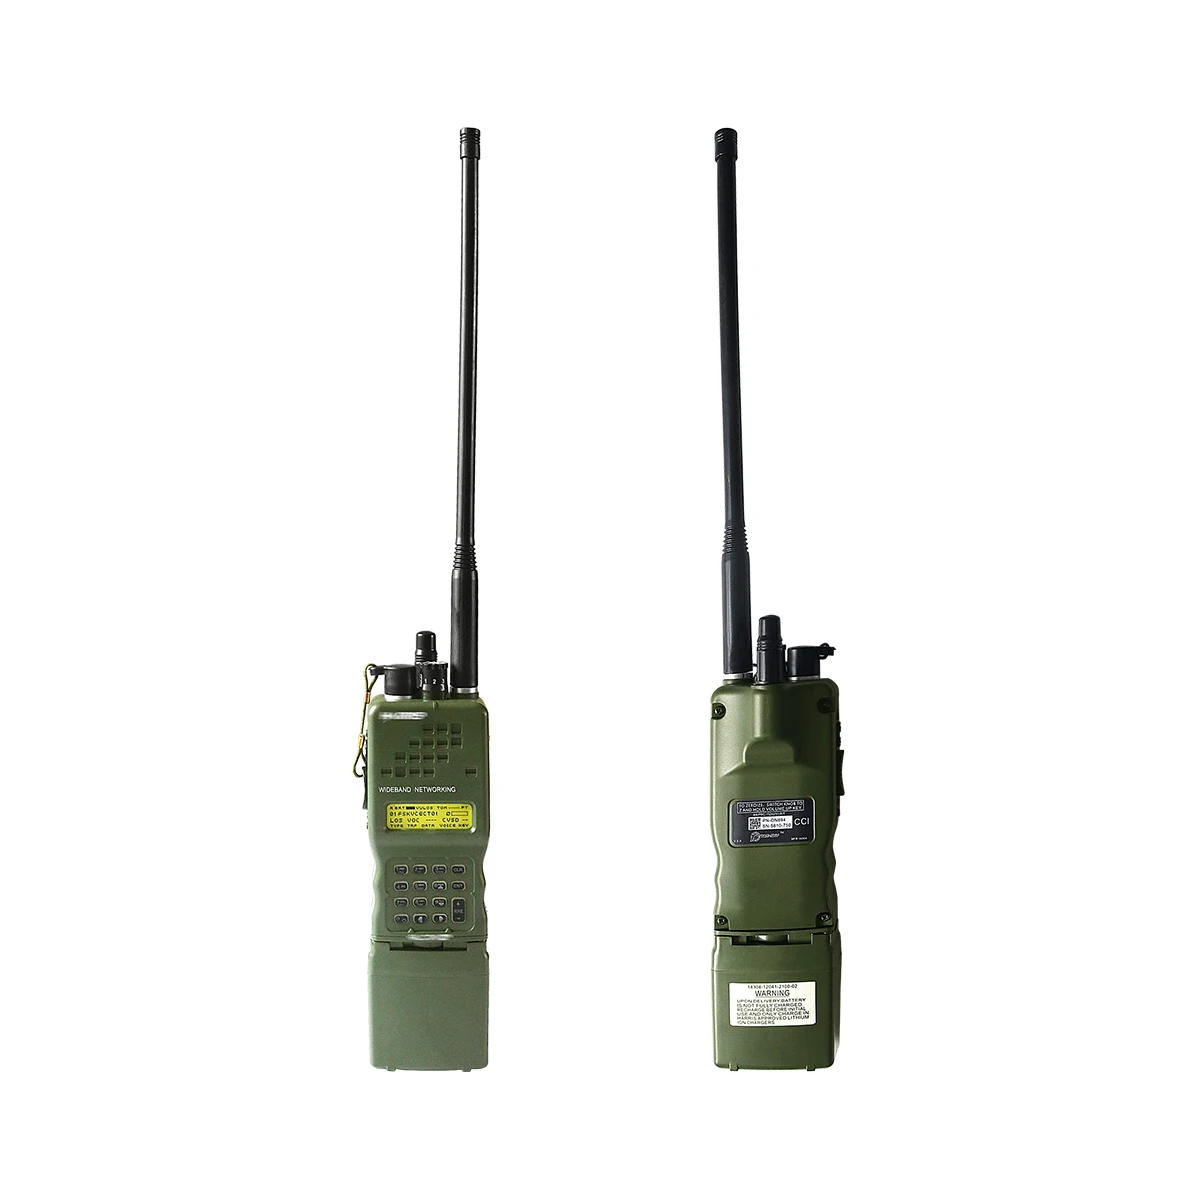 fone-de-ouvido-militar-tipo-walkie-talkie-fone-de-ouvido-tatico-modelo-profissional-an-prc150-152a-case-virtual